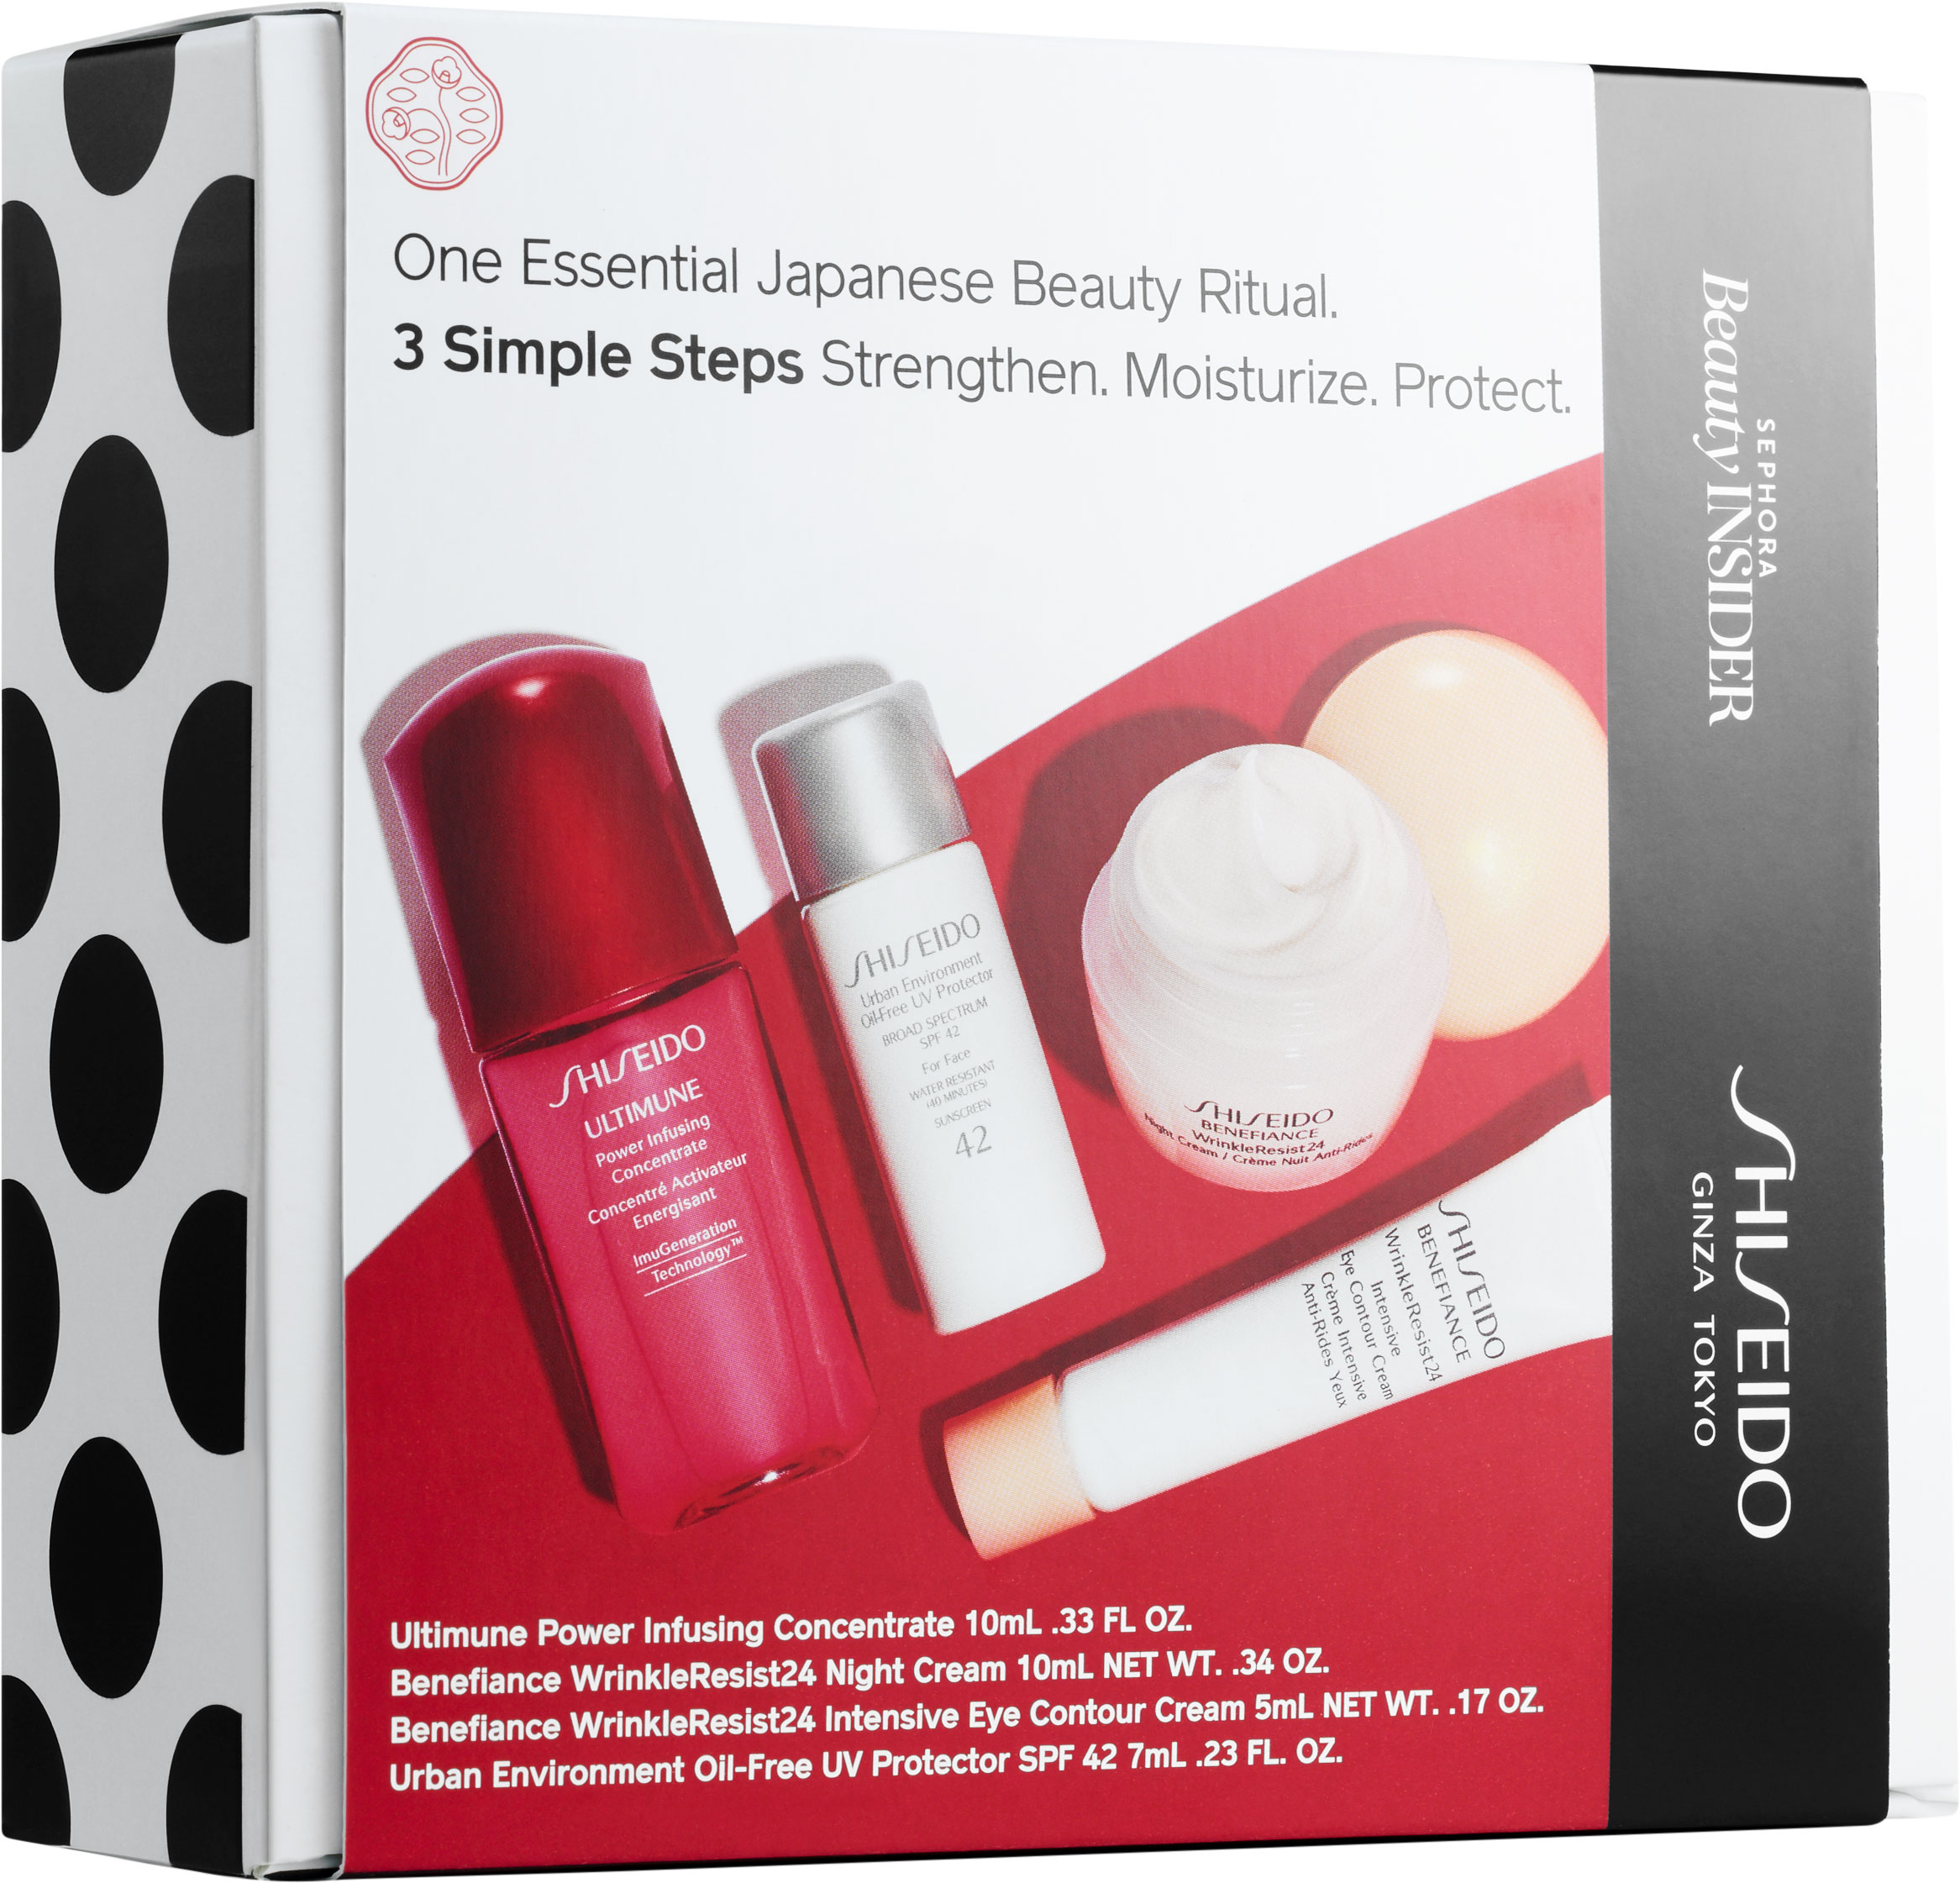  Shiseido 500-point box